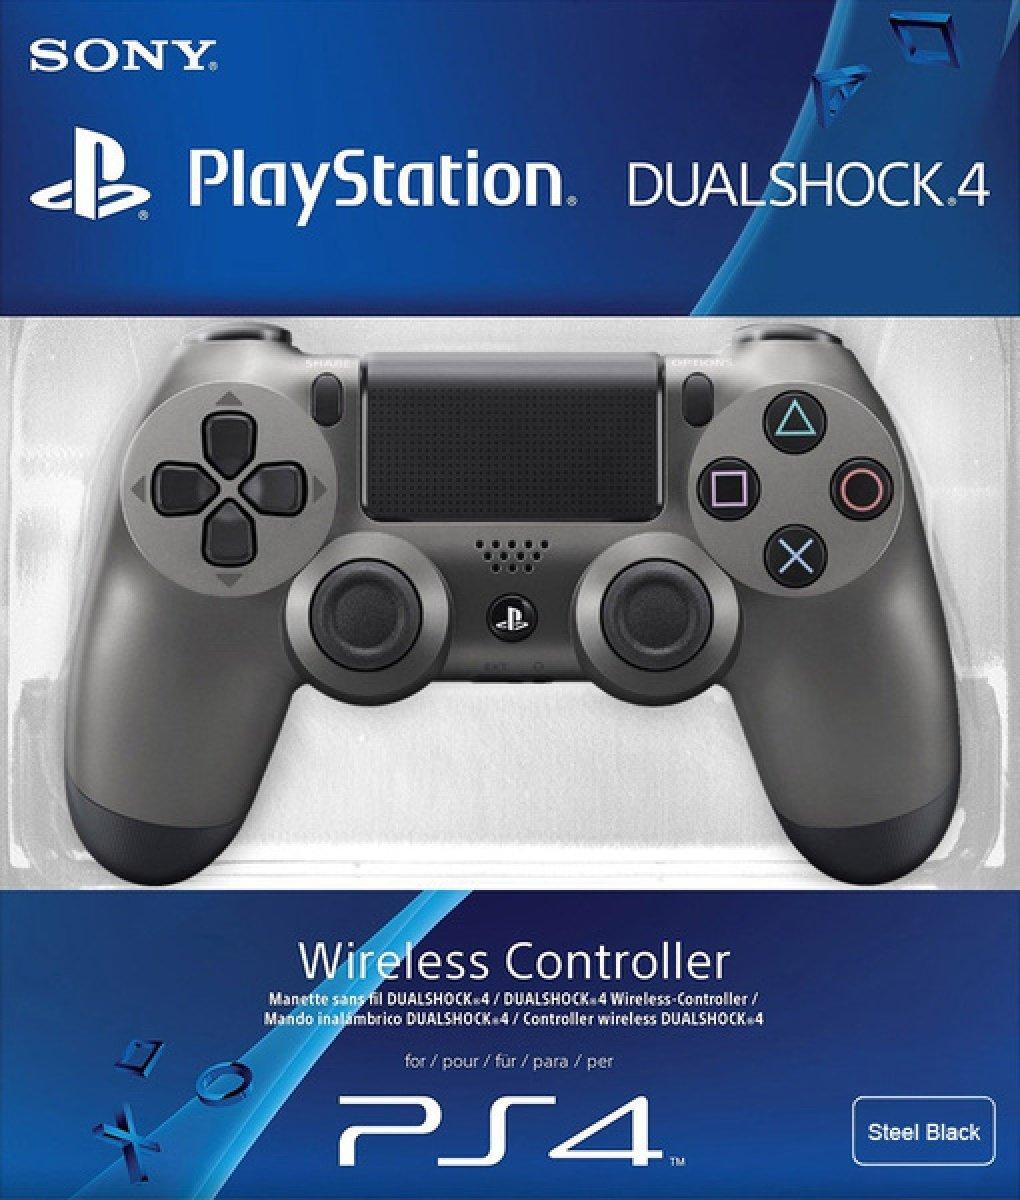 Геймпад PS4 беспроводной DualShock 4 Wireless Controller (Steel Black) (Реплика), фото 1